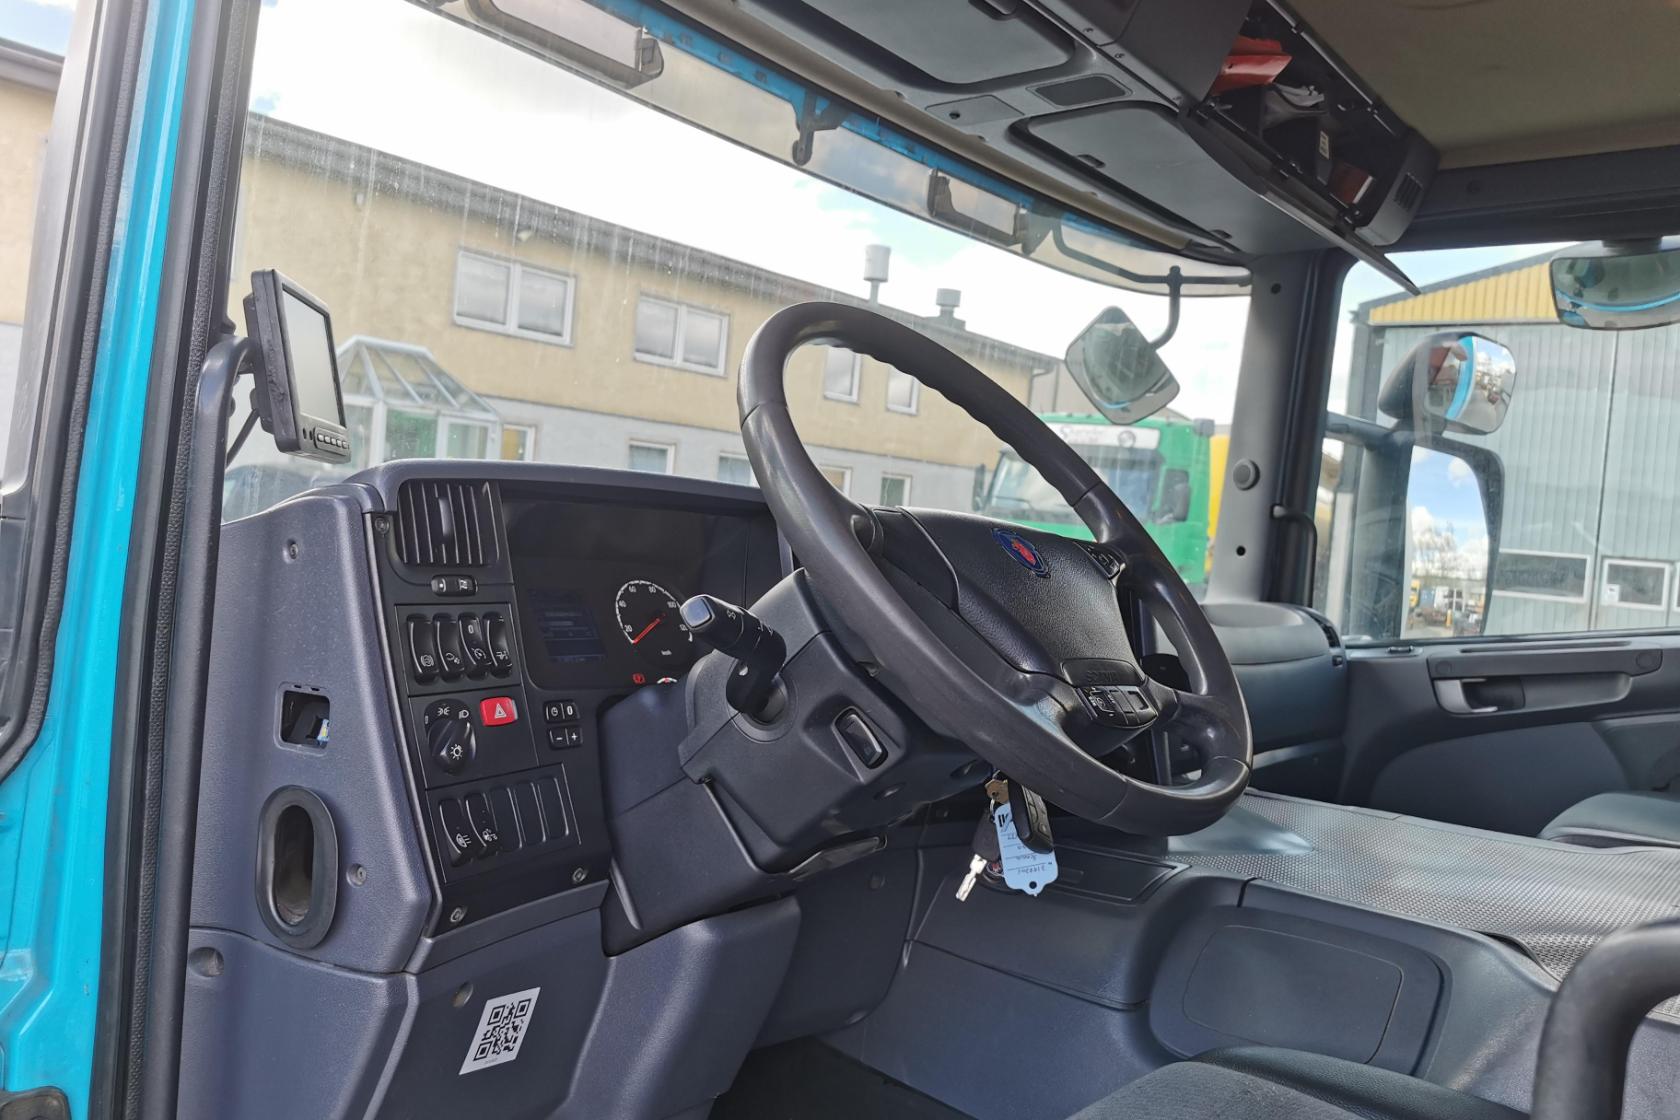 Scania P230 - 512 615 km - Automatic - blue - 2013